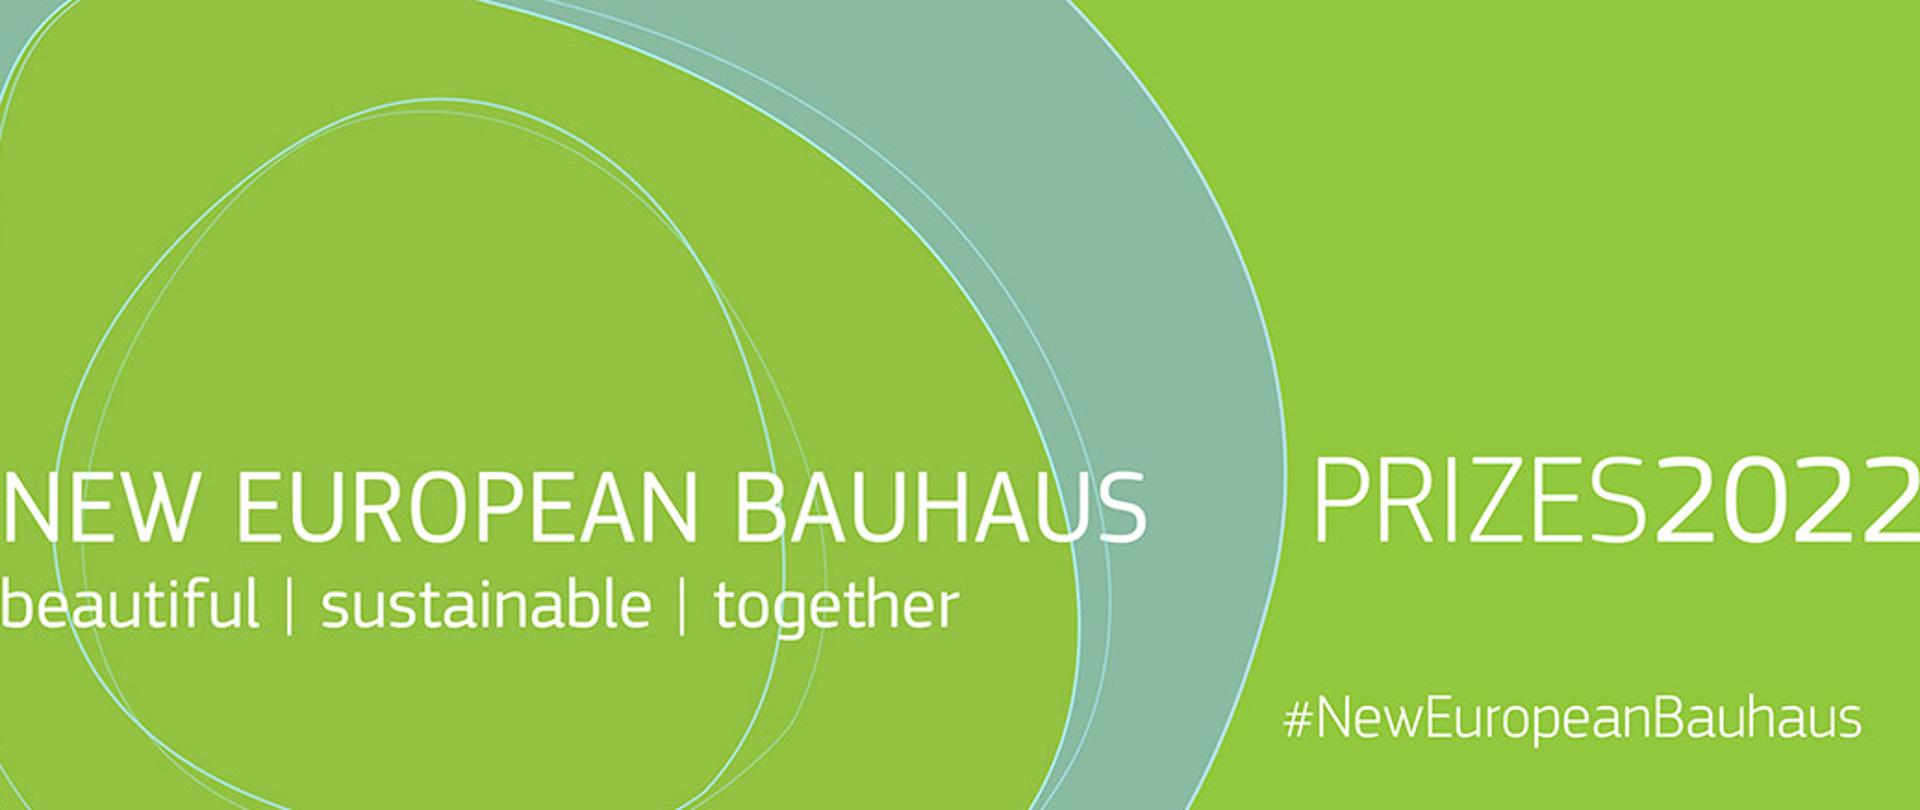 Konkurs na projekty w ramach New European Bauhaus